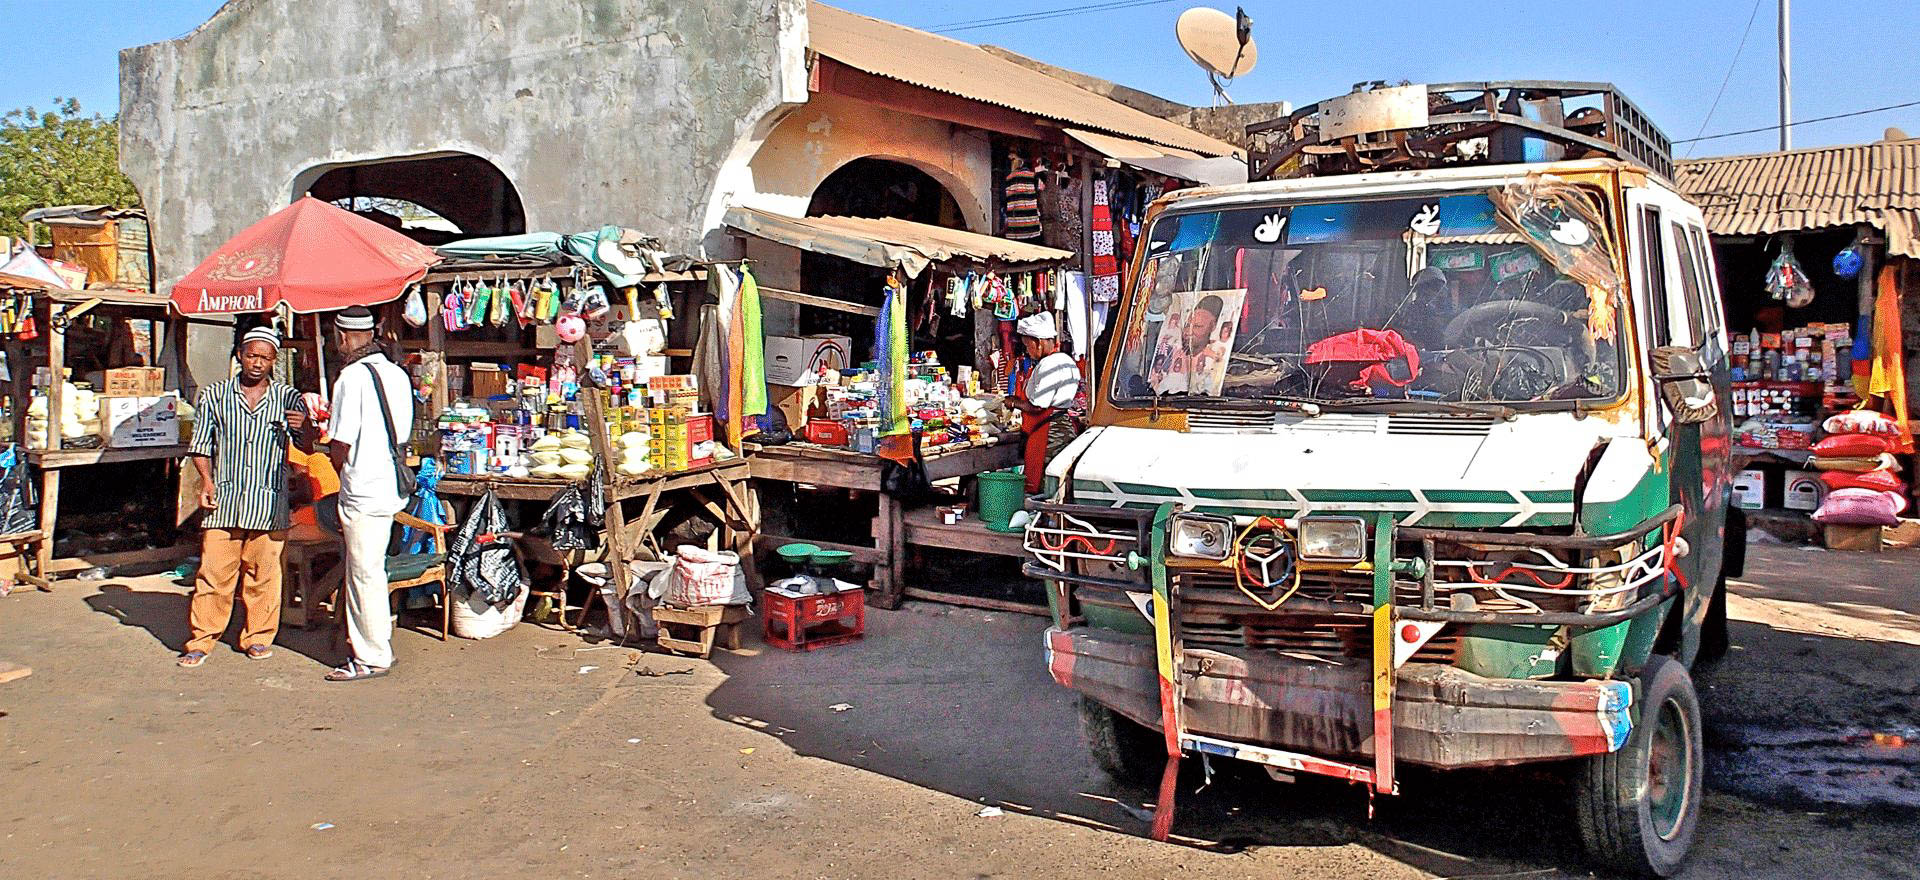 Market scene in Dakar - Senegal Holidays and Tours